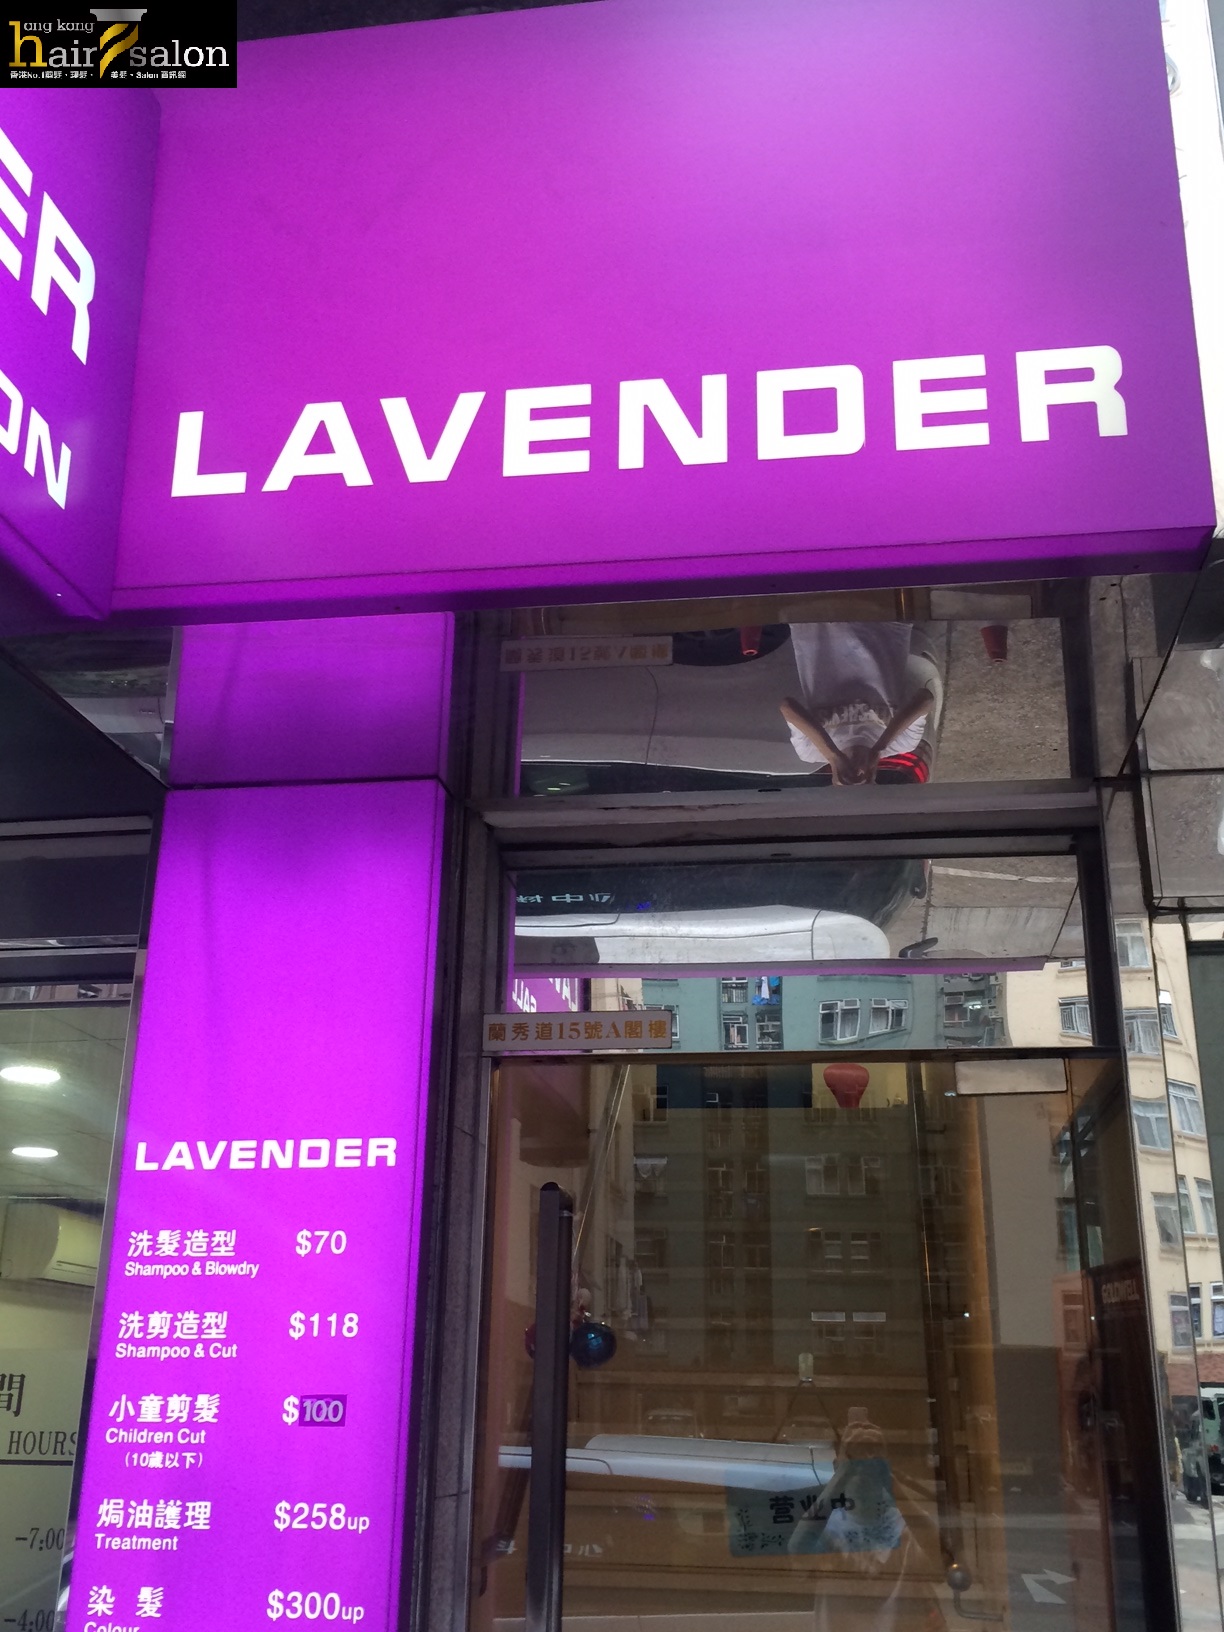 Haircut: Lavender Salon